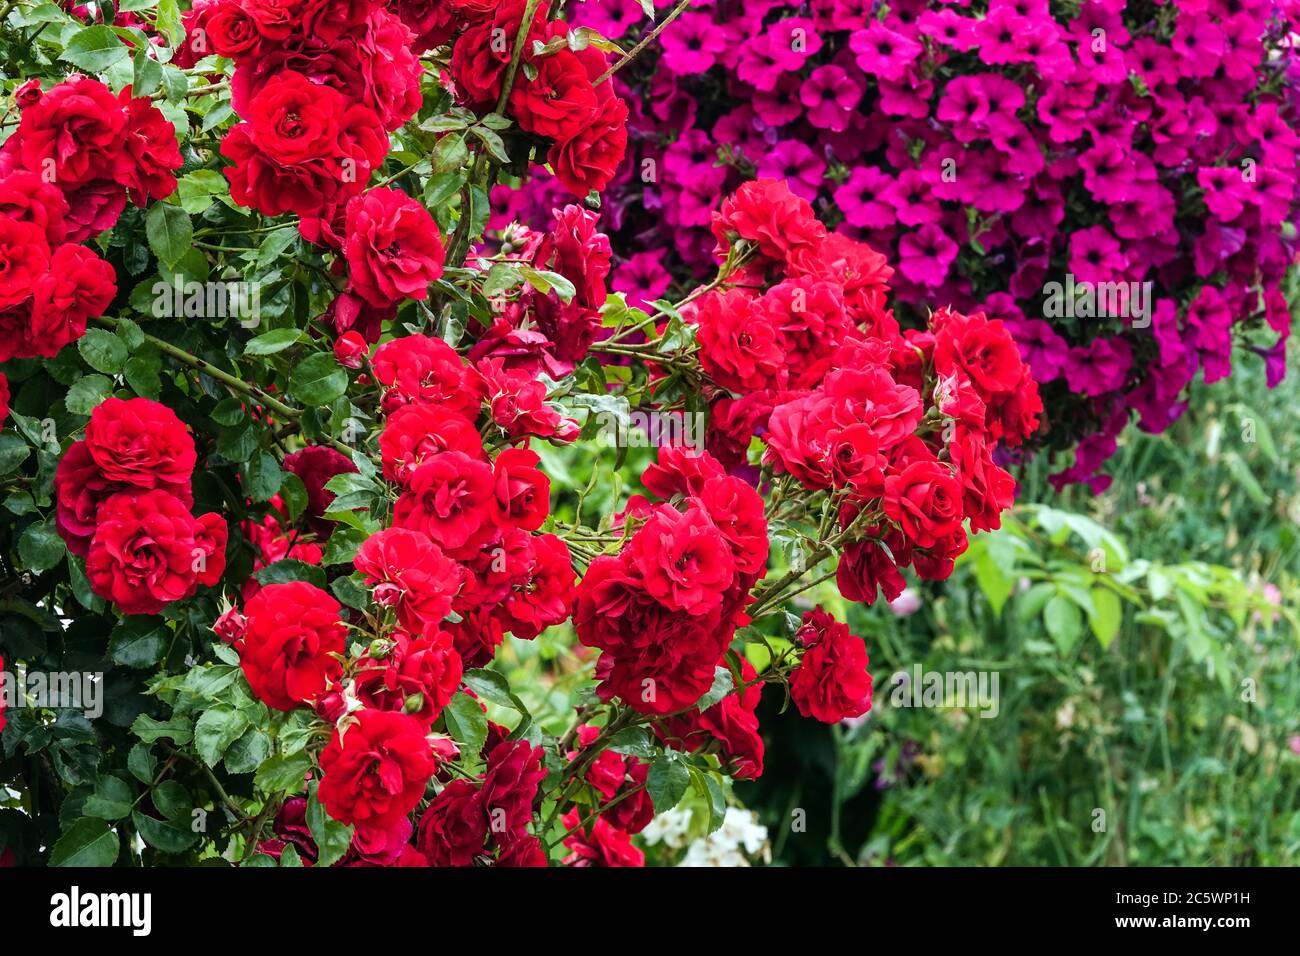 Rosso giardino di rose petunia rose rampicanti rosse Foto Stock